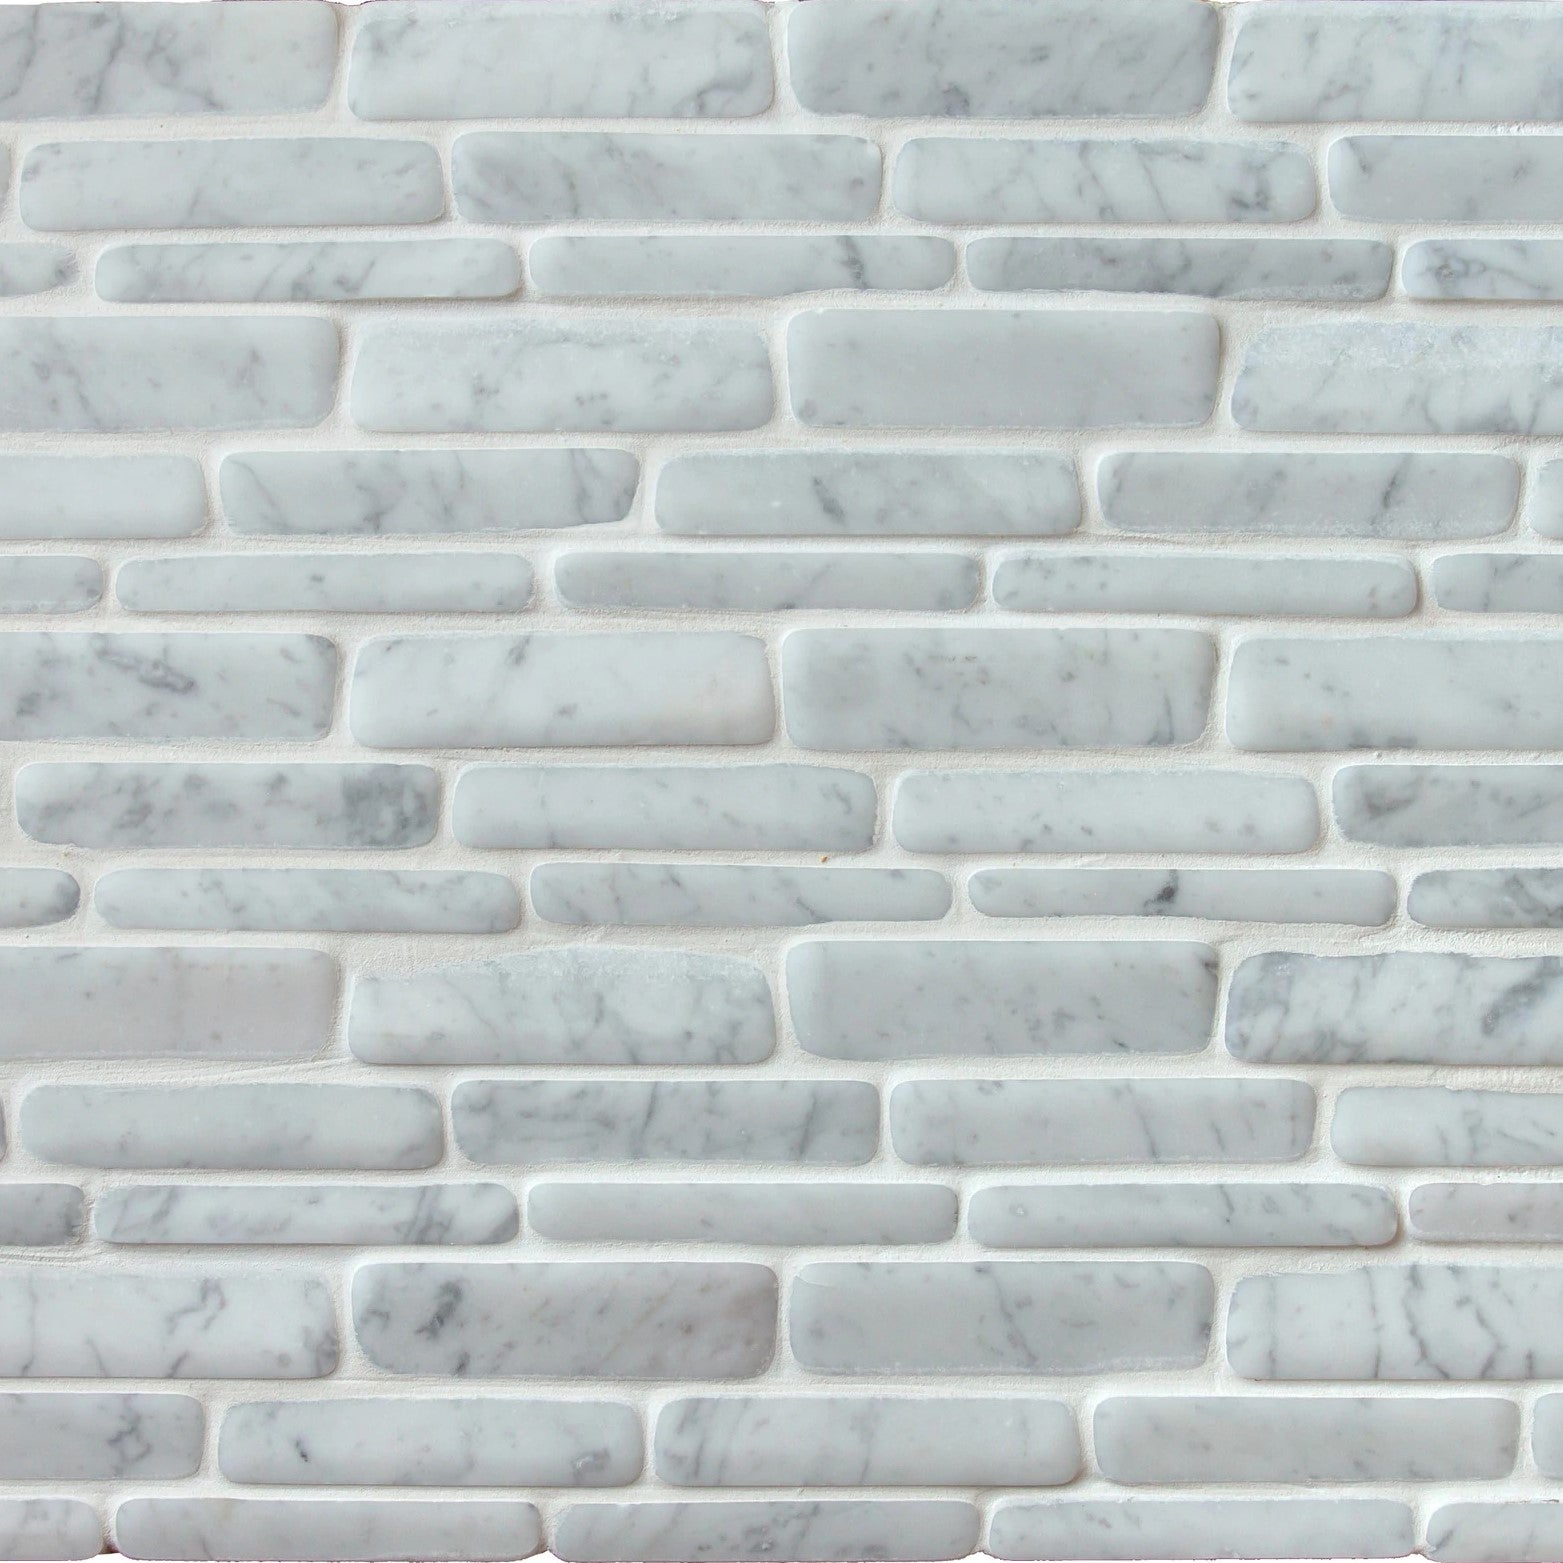 giovanni barbieri timeworn carrara natural white marble brick pattern pattern mosaic distributed by surface group international